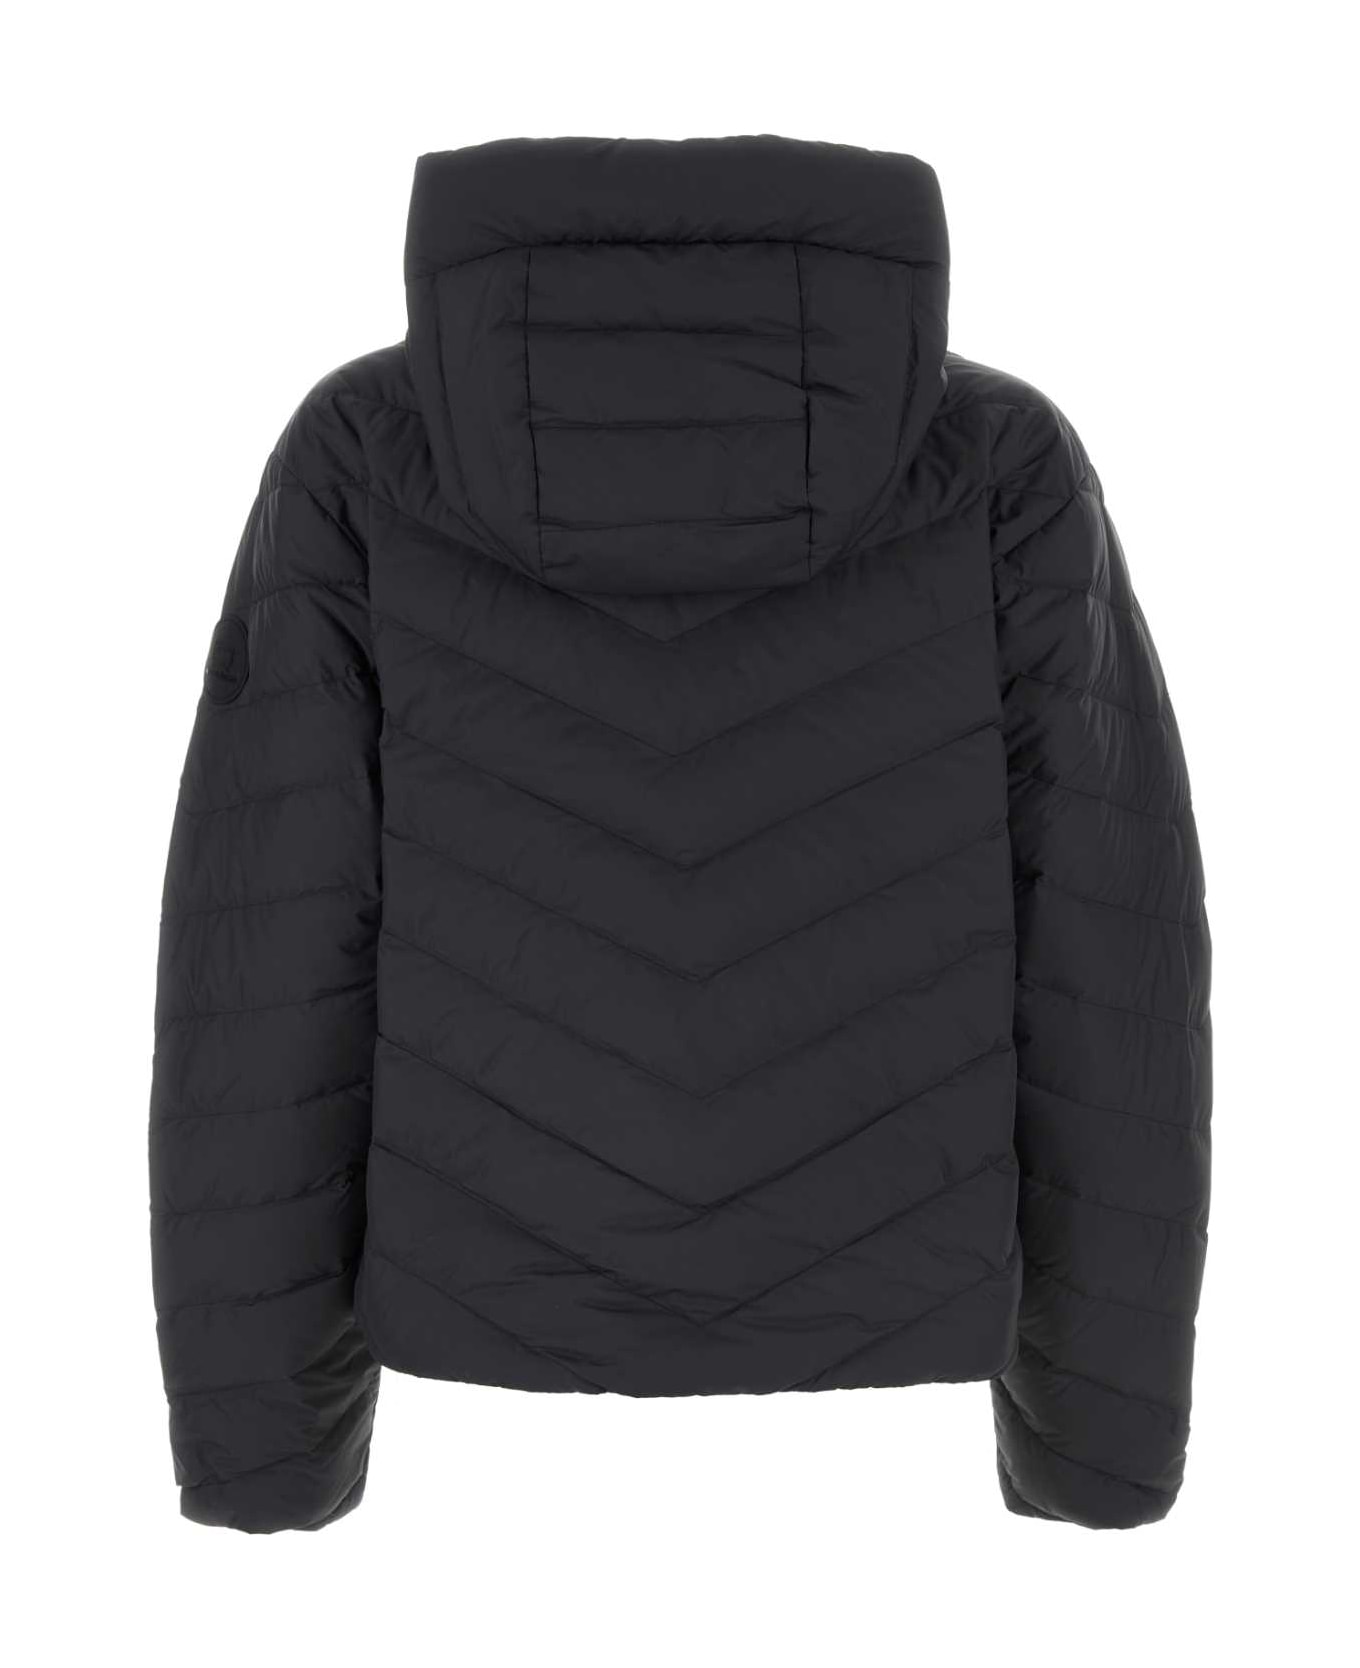 Woolrich Black Polyester Down Jacket - Black ダウンジャケット